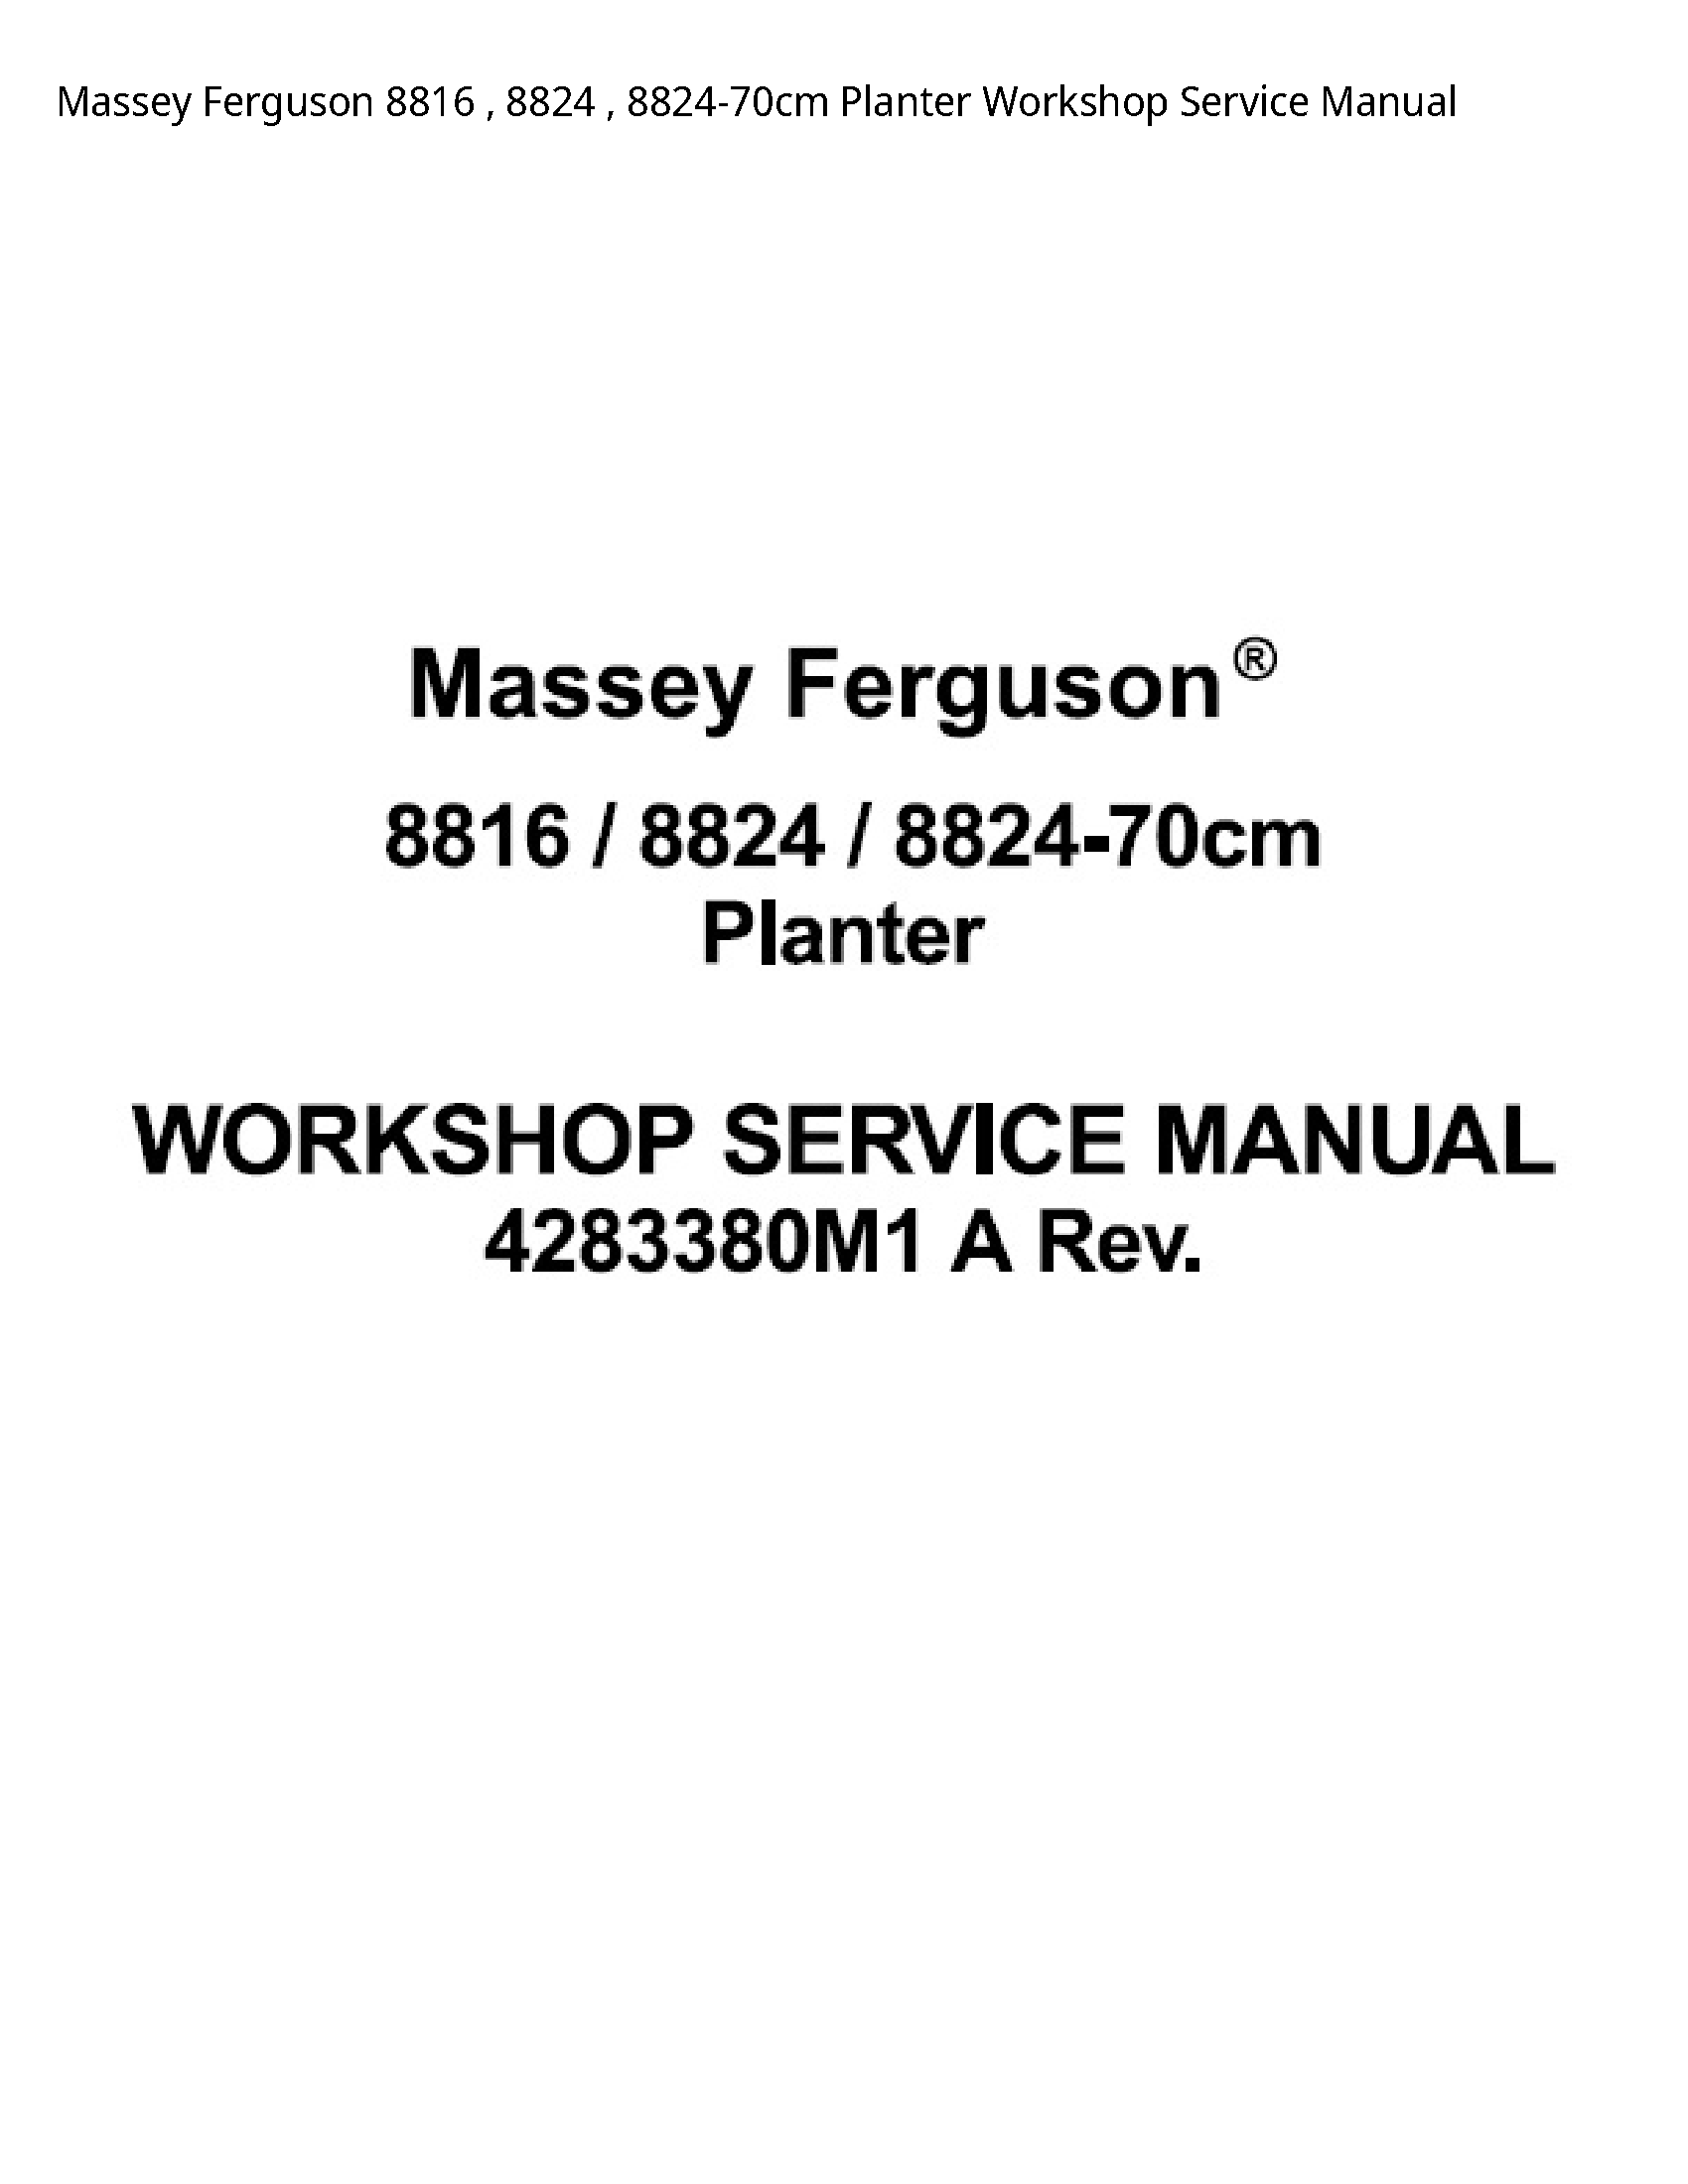 Massey Ferguson 8816 Planter Service manual